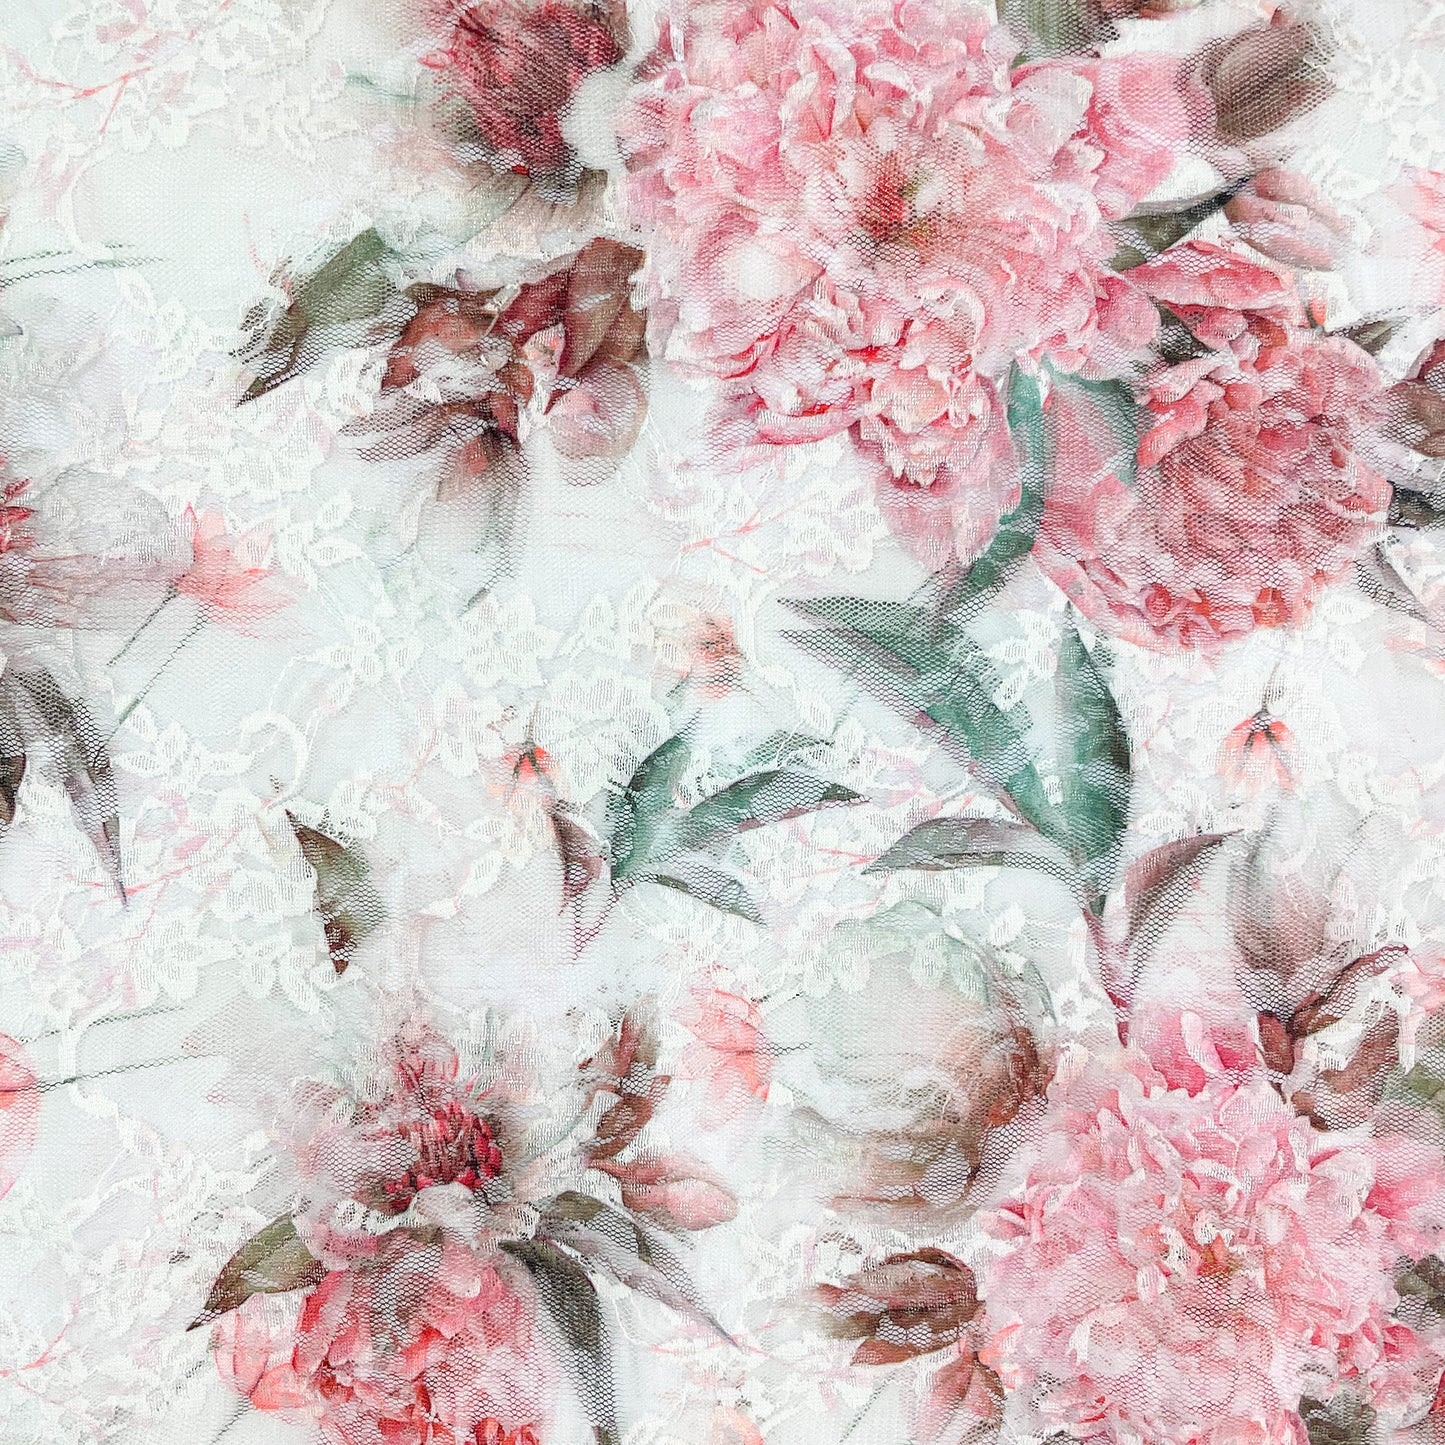 Peach Blush Beige Floral Print Lace Tunic Top